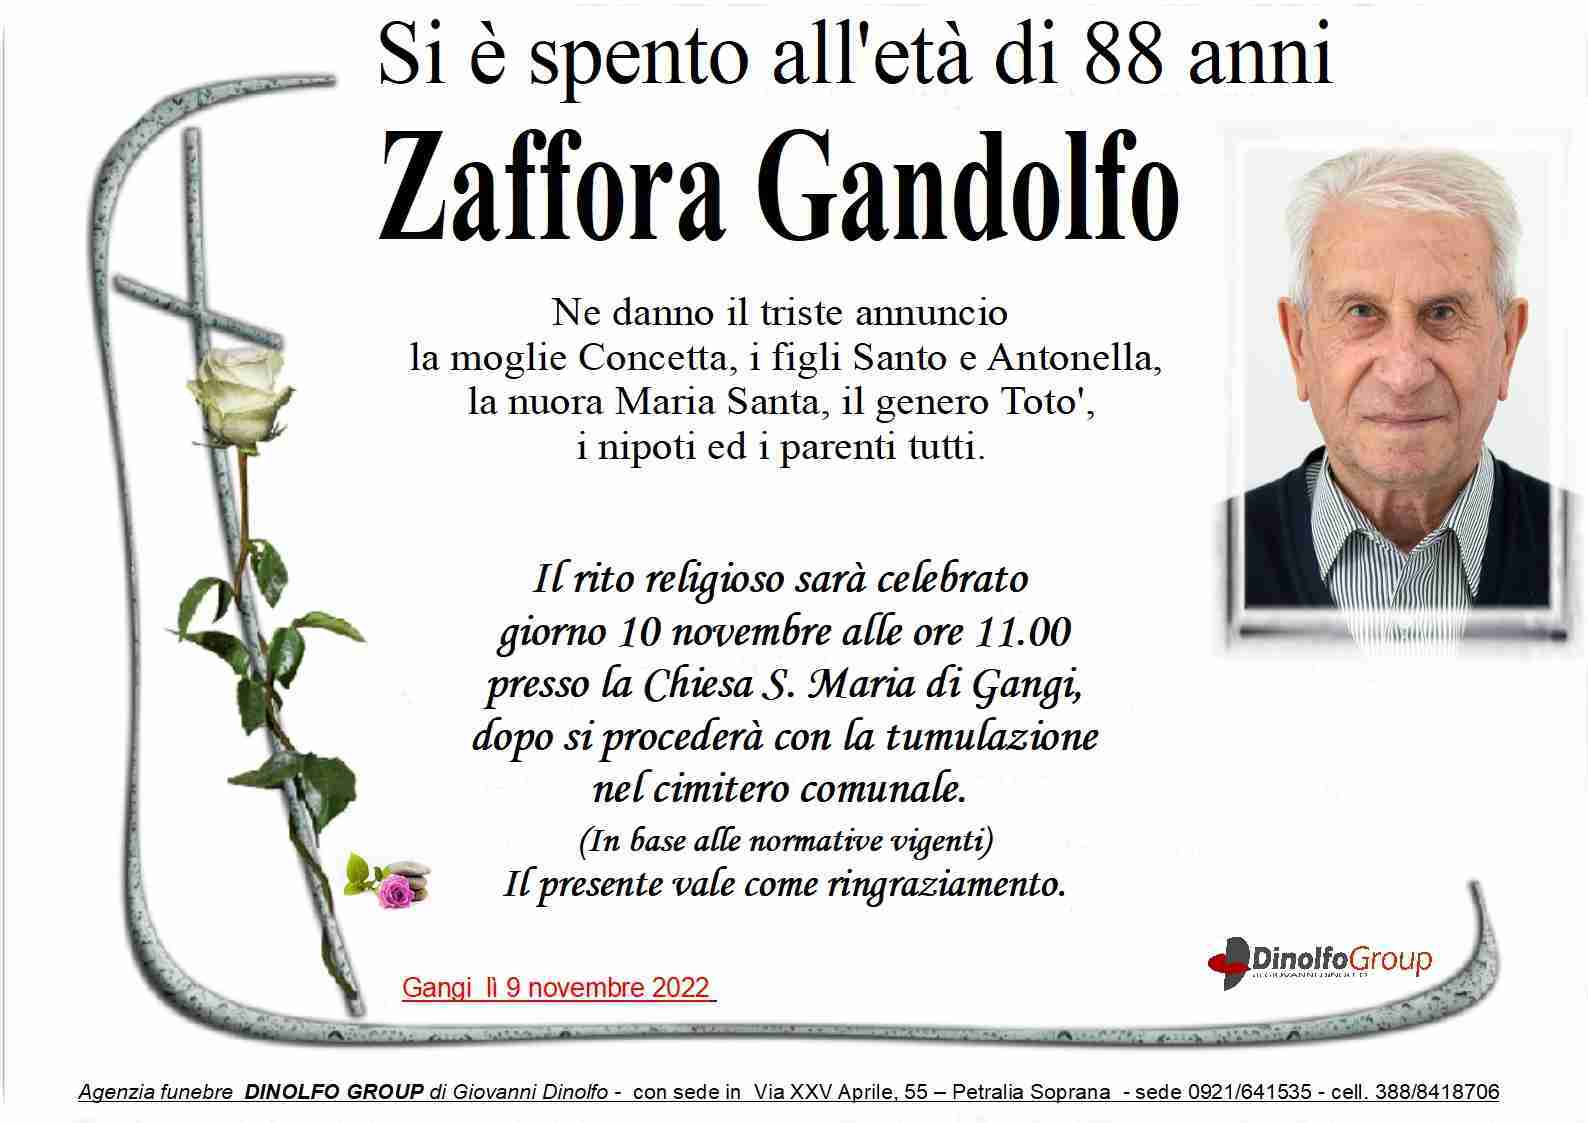 Gandolfo Zaffora